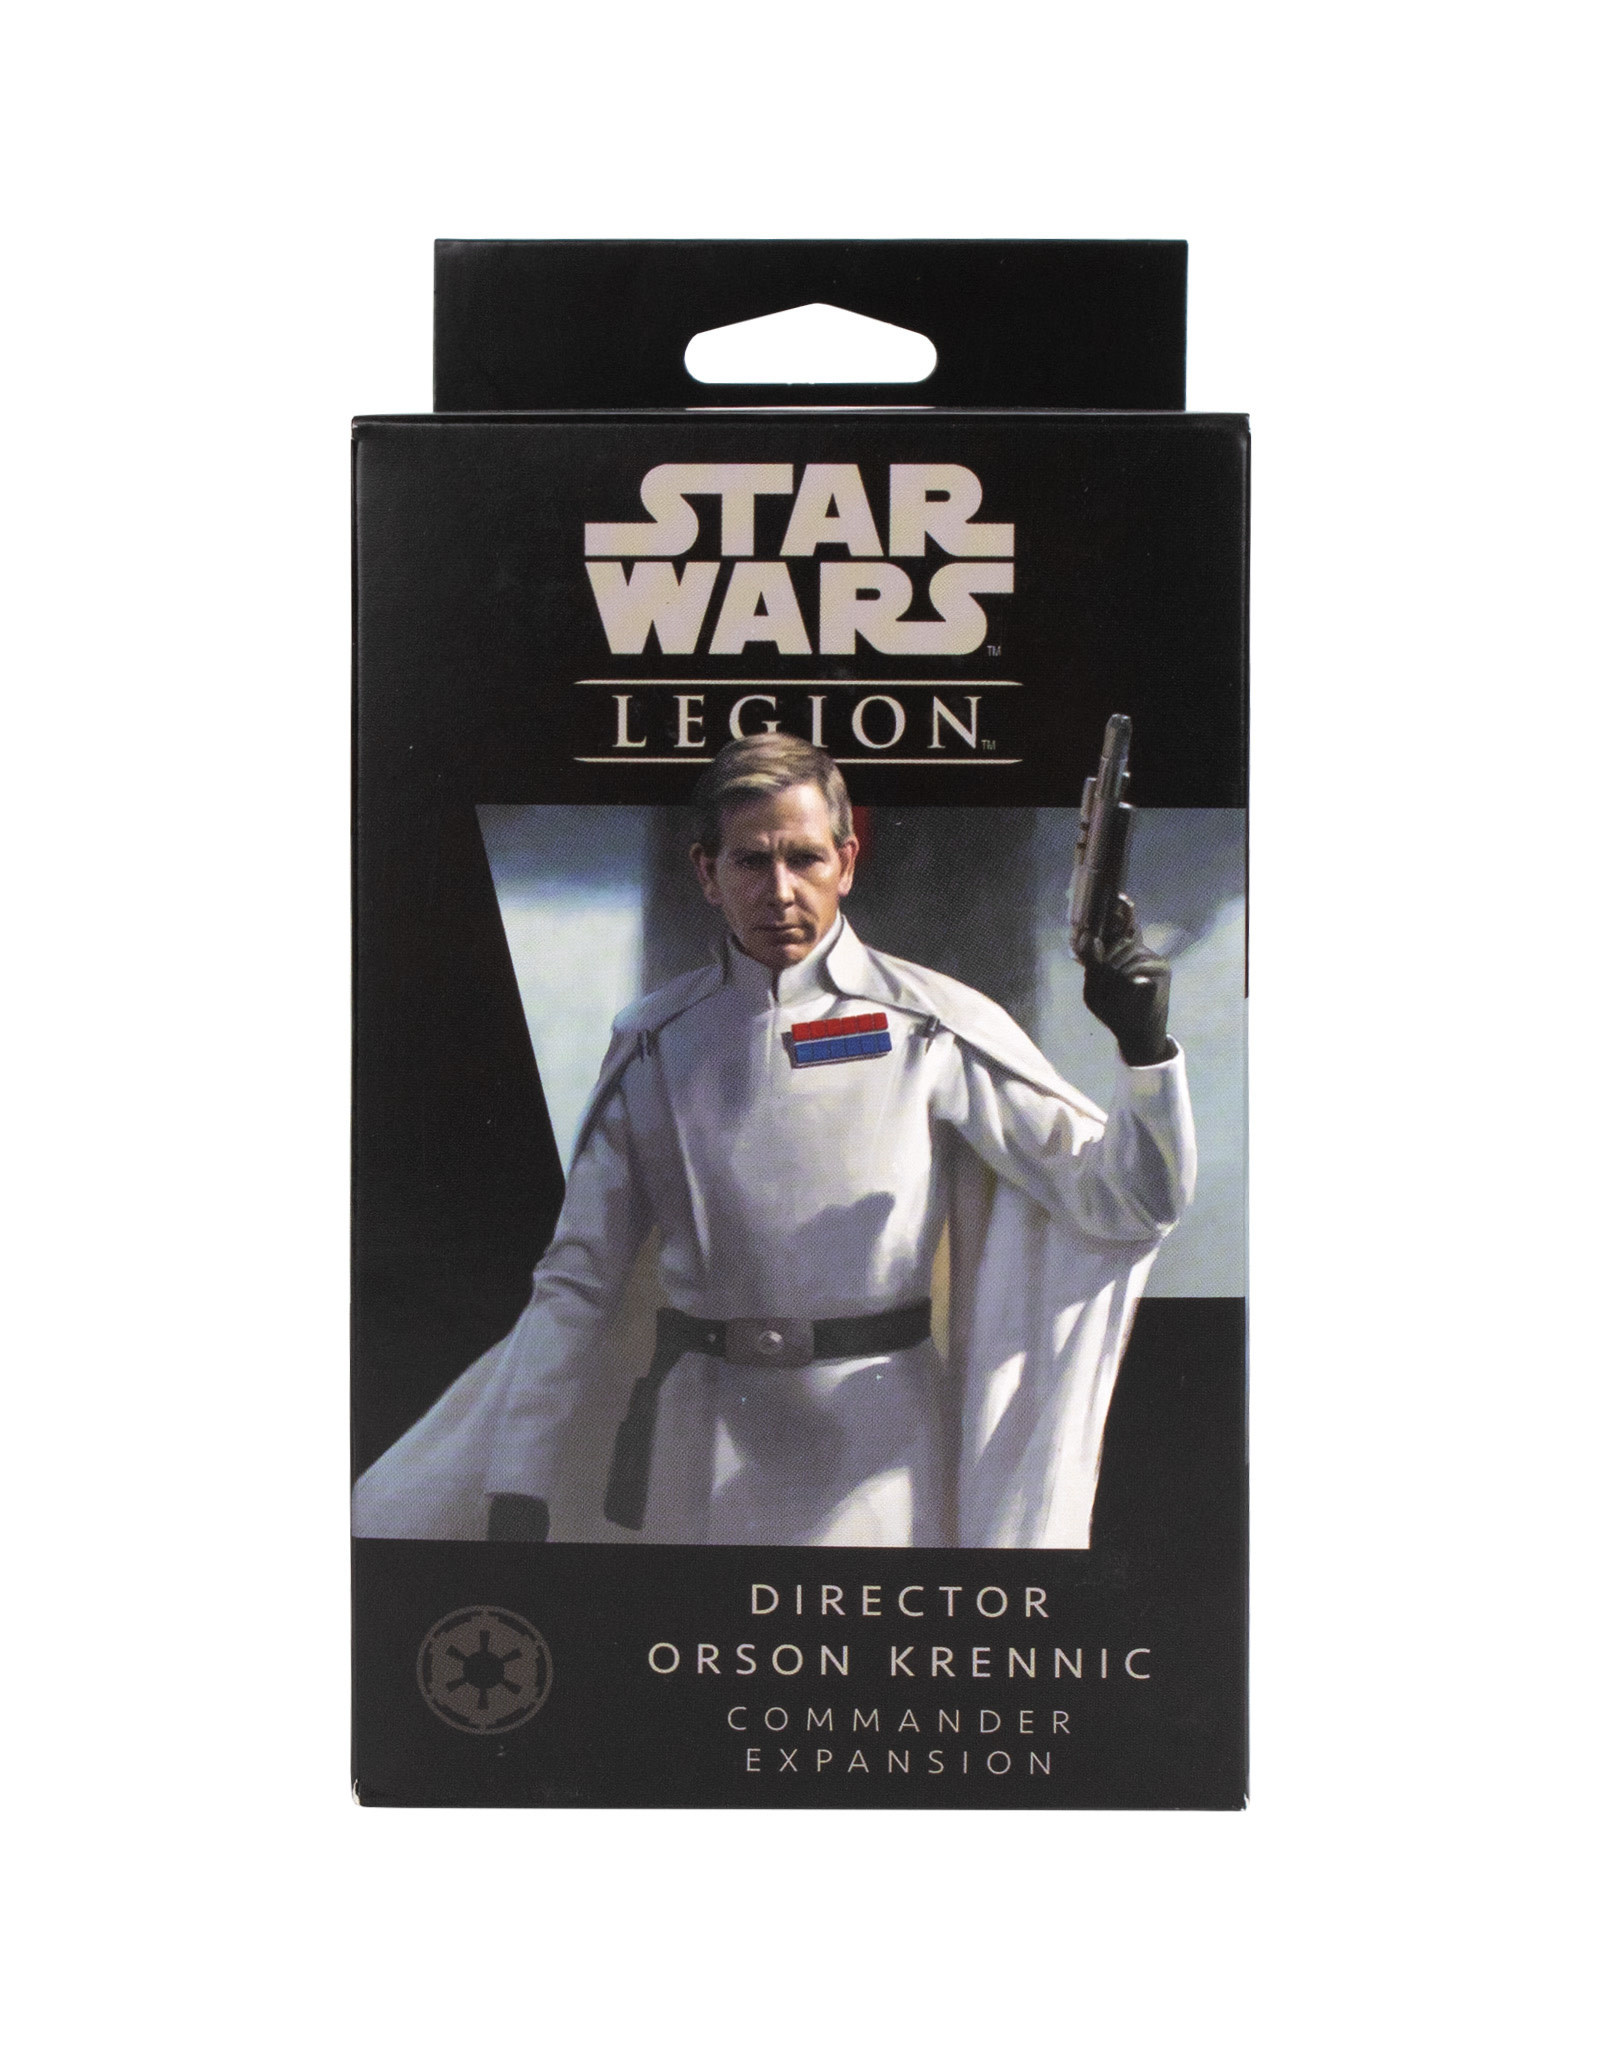 STAR WARS LEGION Star Wars Legion Director Orson Krennic Commander Expansion